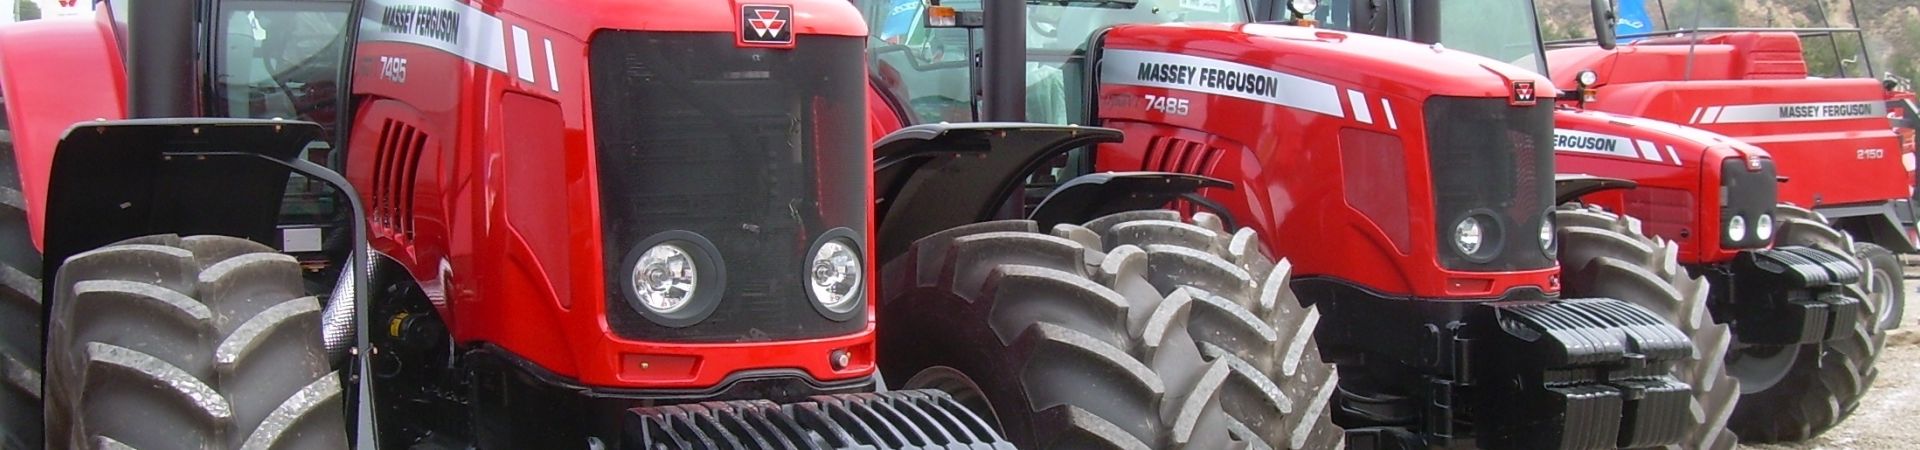 A line of red massey ferguson tractors